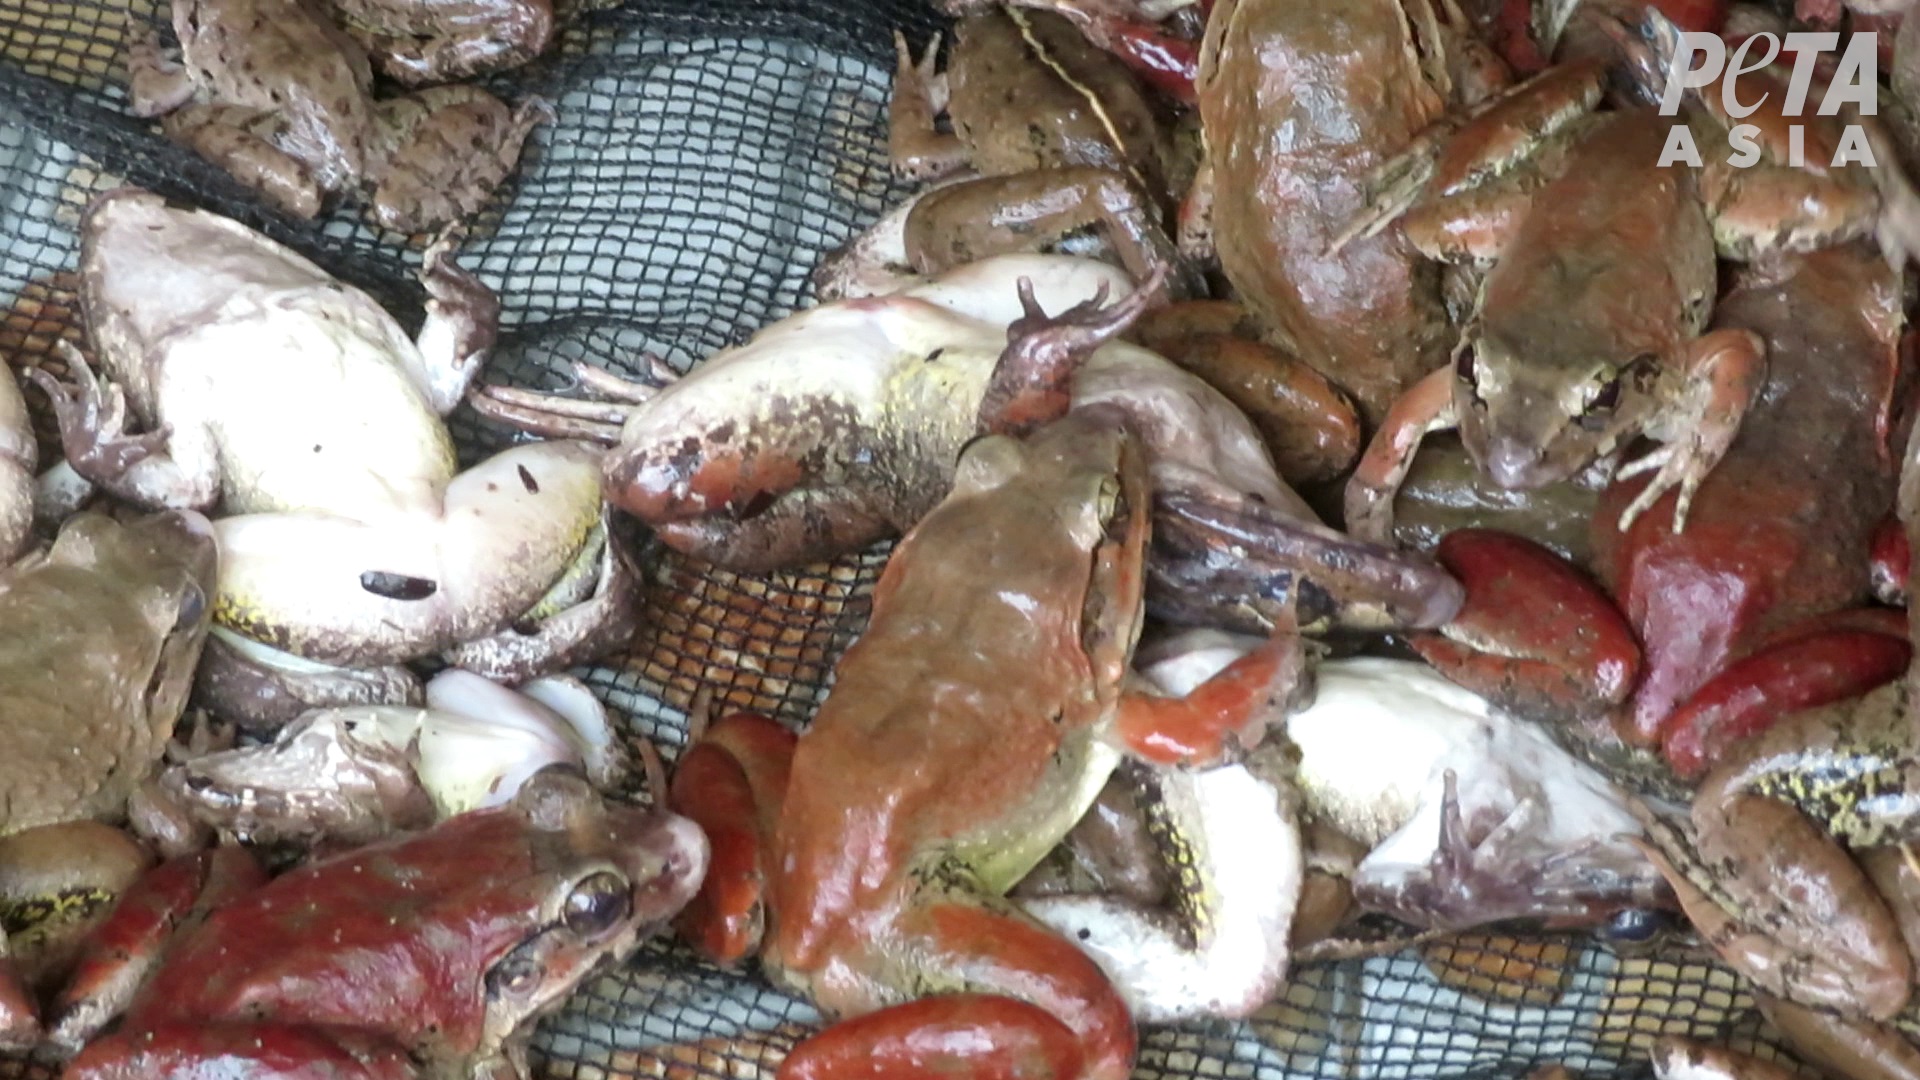 PETA Asia Uncovers Cruelty in the Frog-Legs Industry - News - PETA Australia